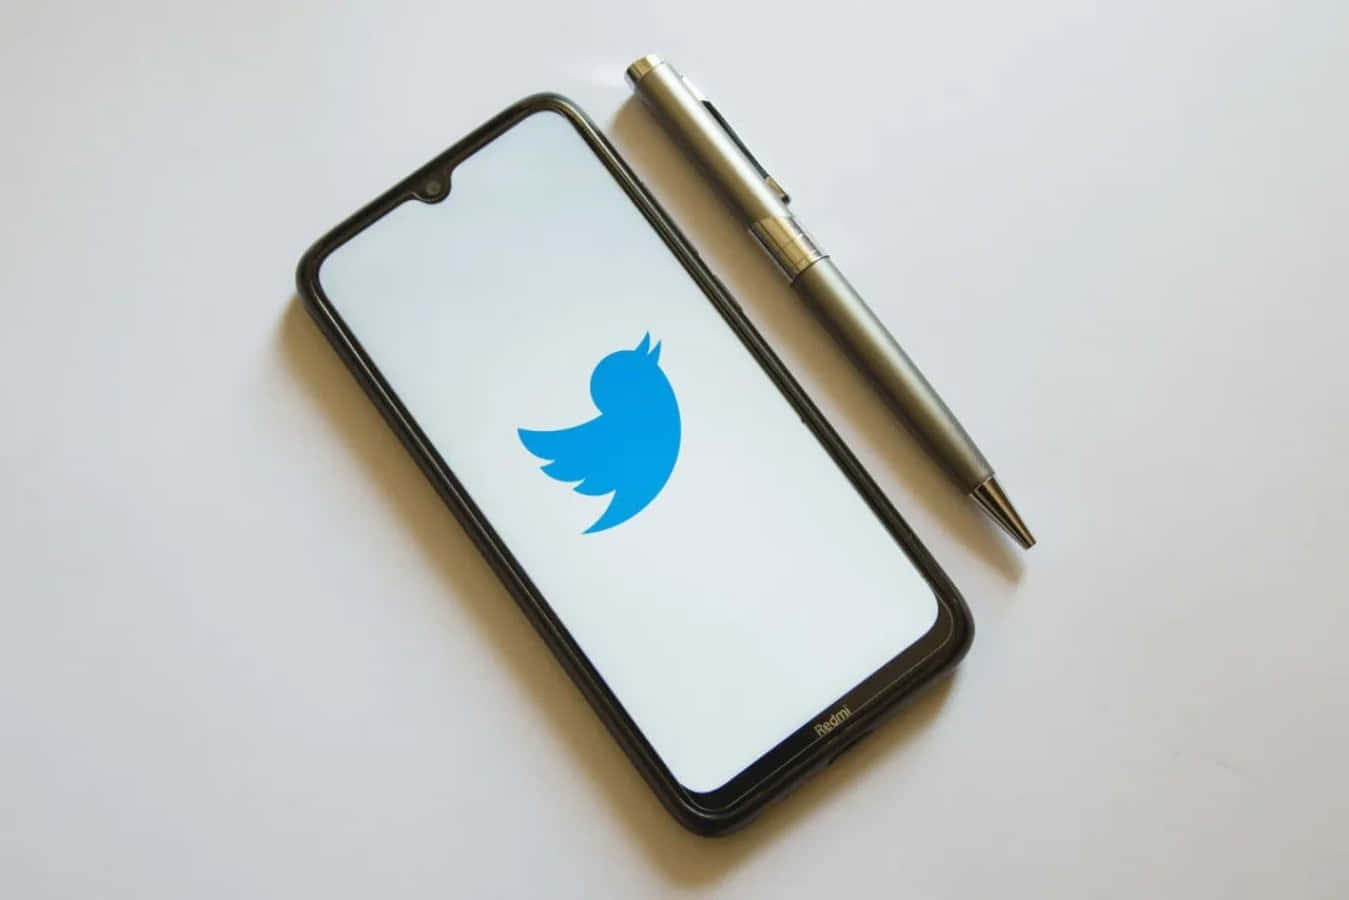 Twitterlogo På En Smartphone Med En Pen